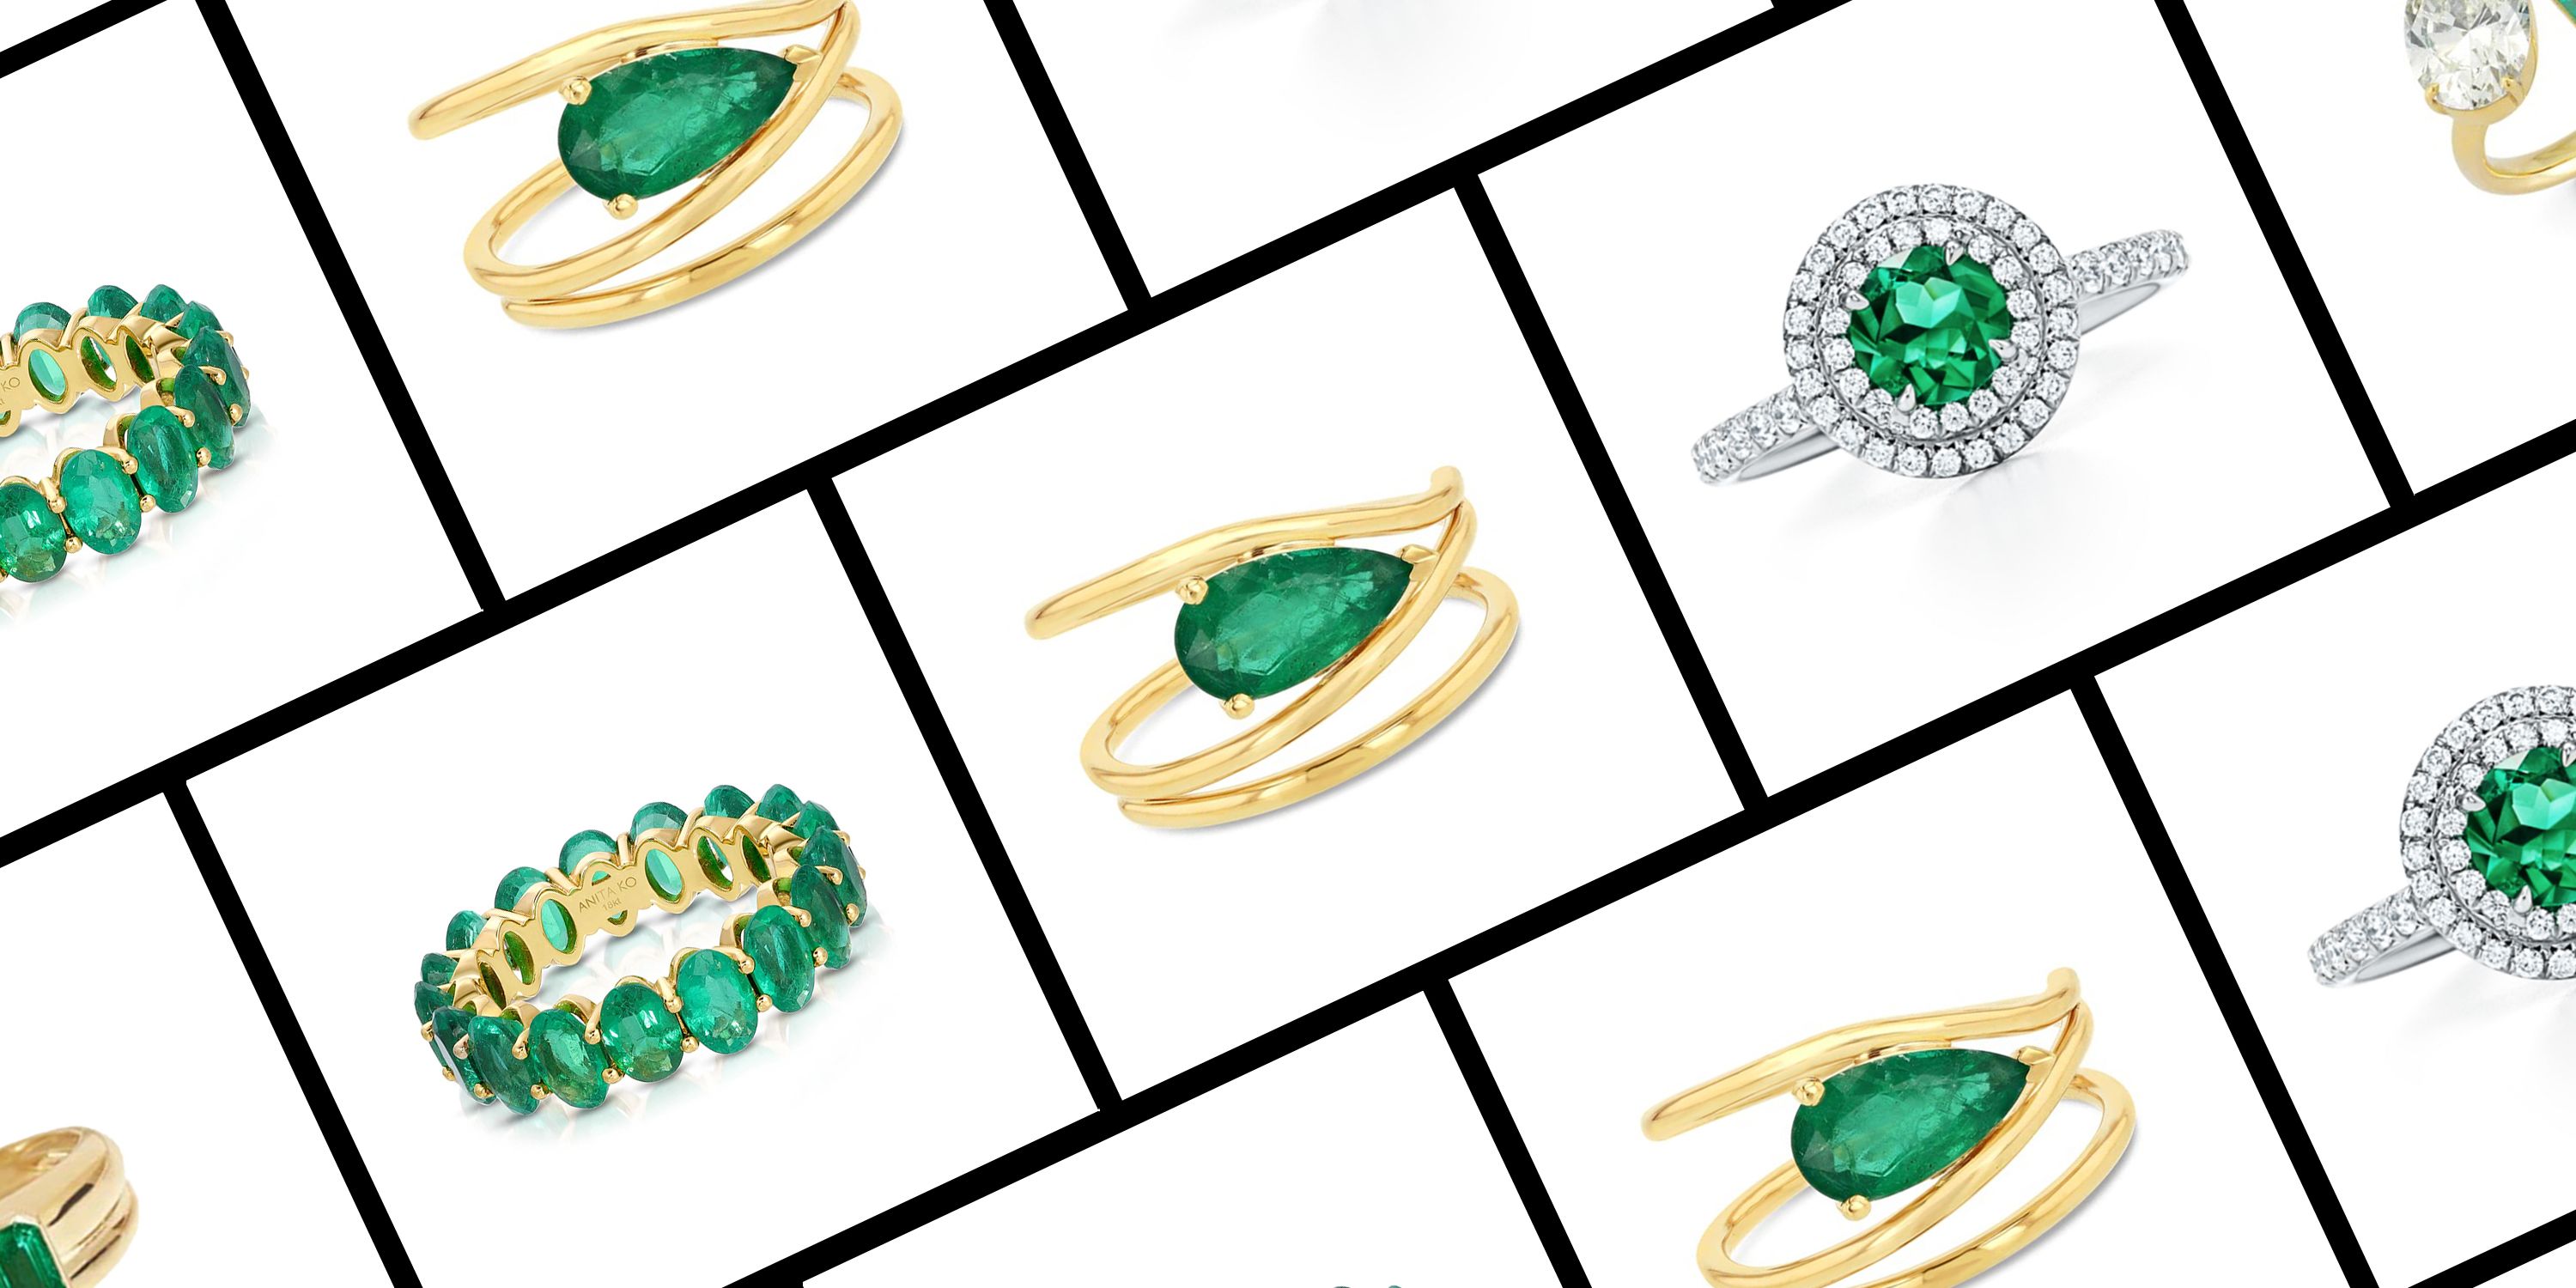 Emerald Ring, Green Stone Ring, Square Emerald Ring, Modern Design Emerald  Ring, Vintage Emerald Ring, Square Cut Emerald Ring, May Stone - Etsy